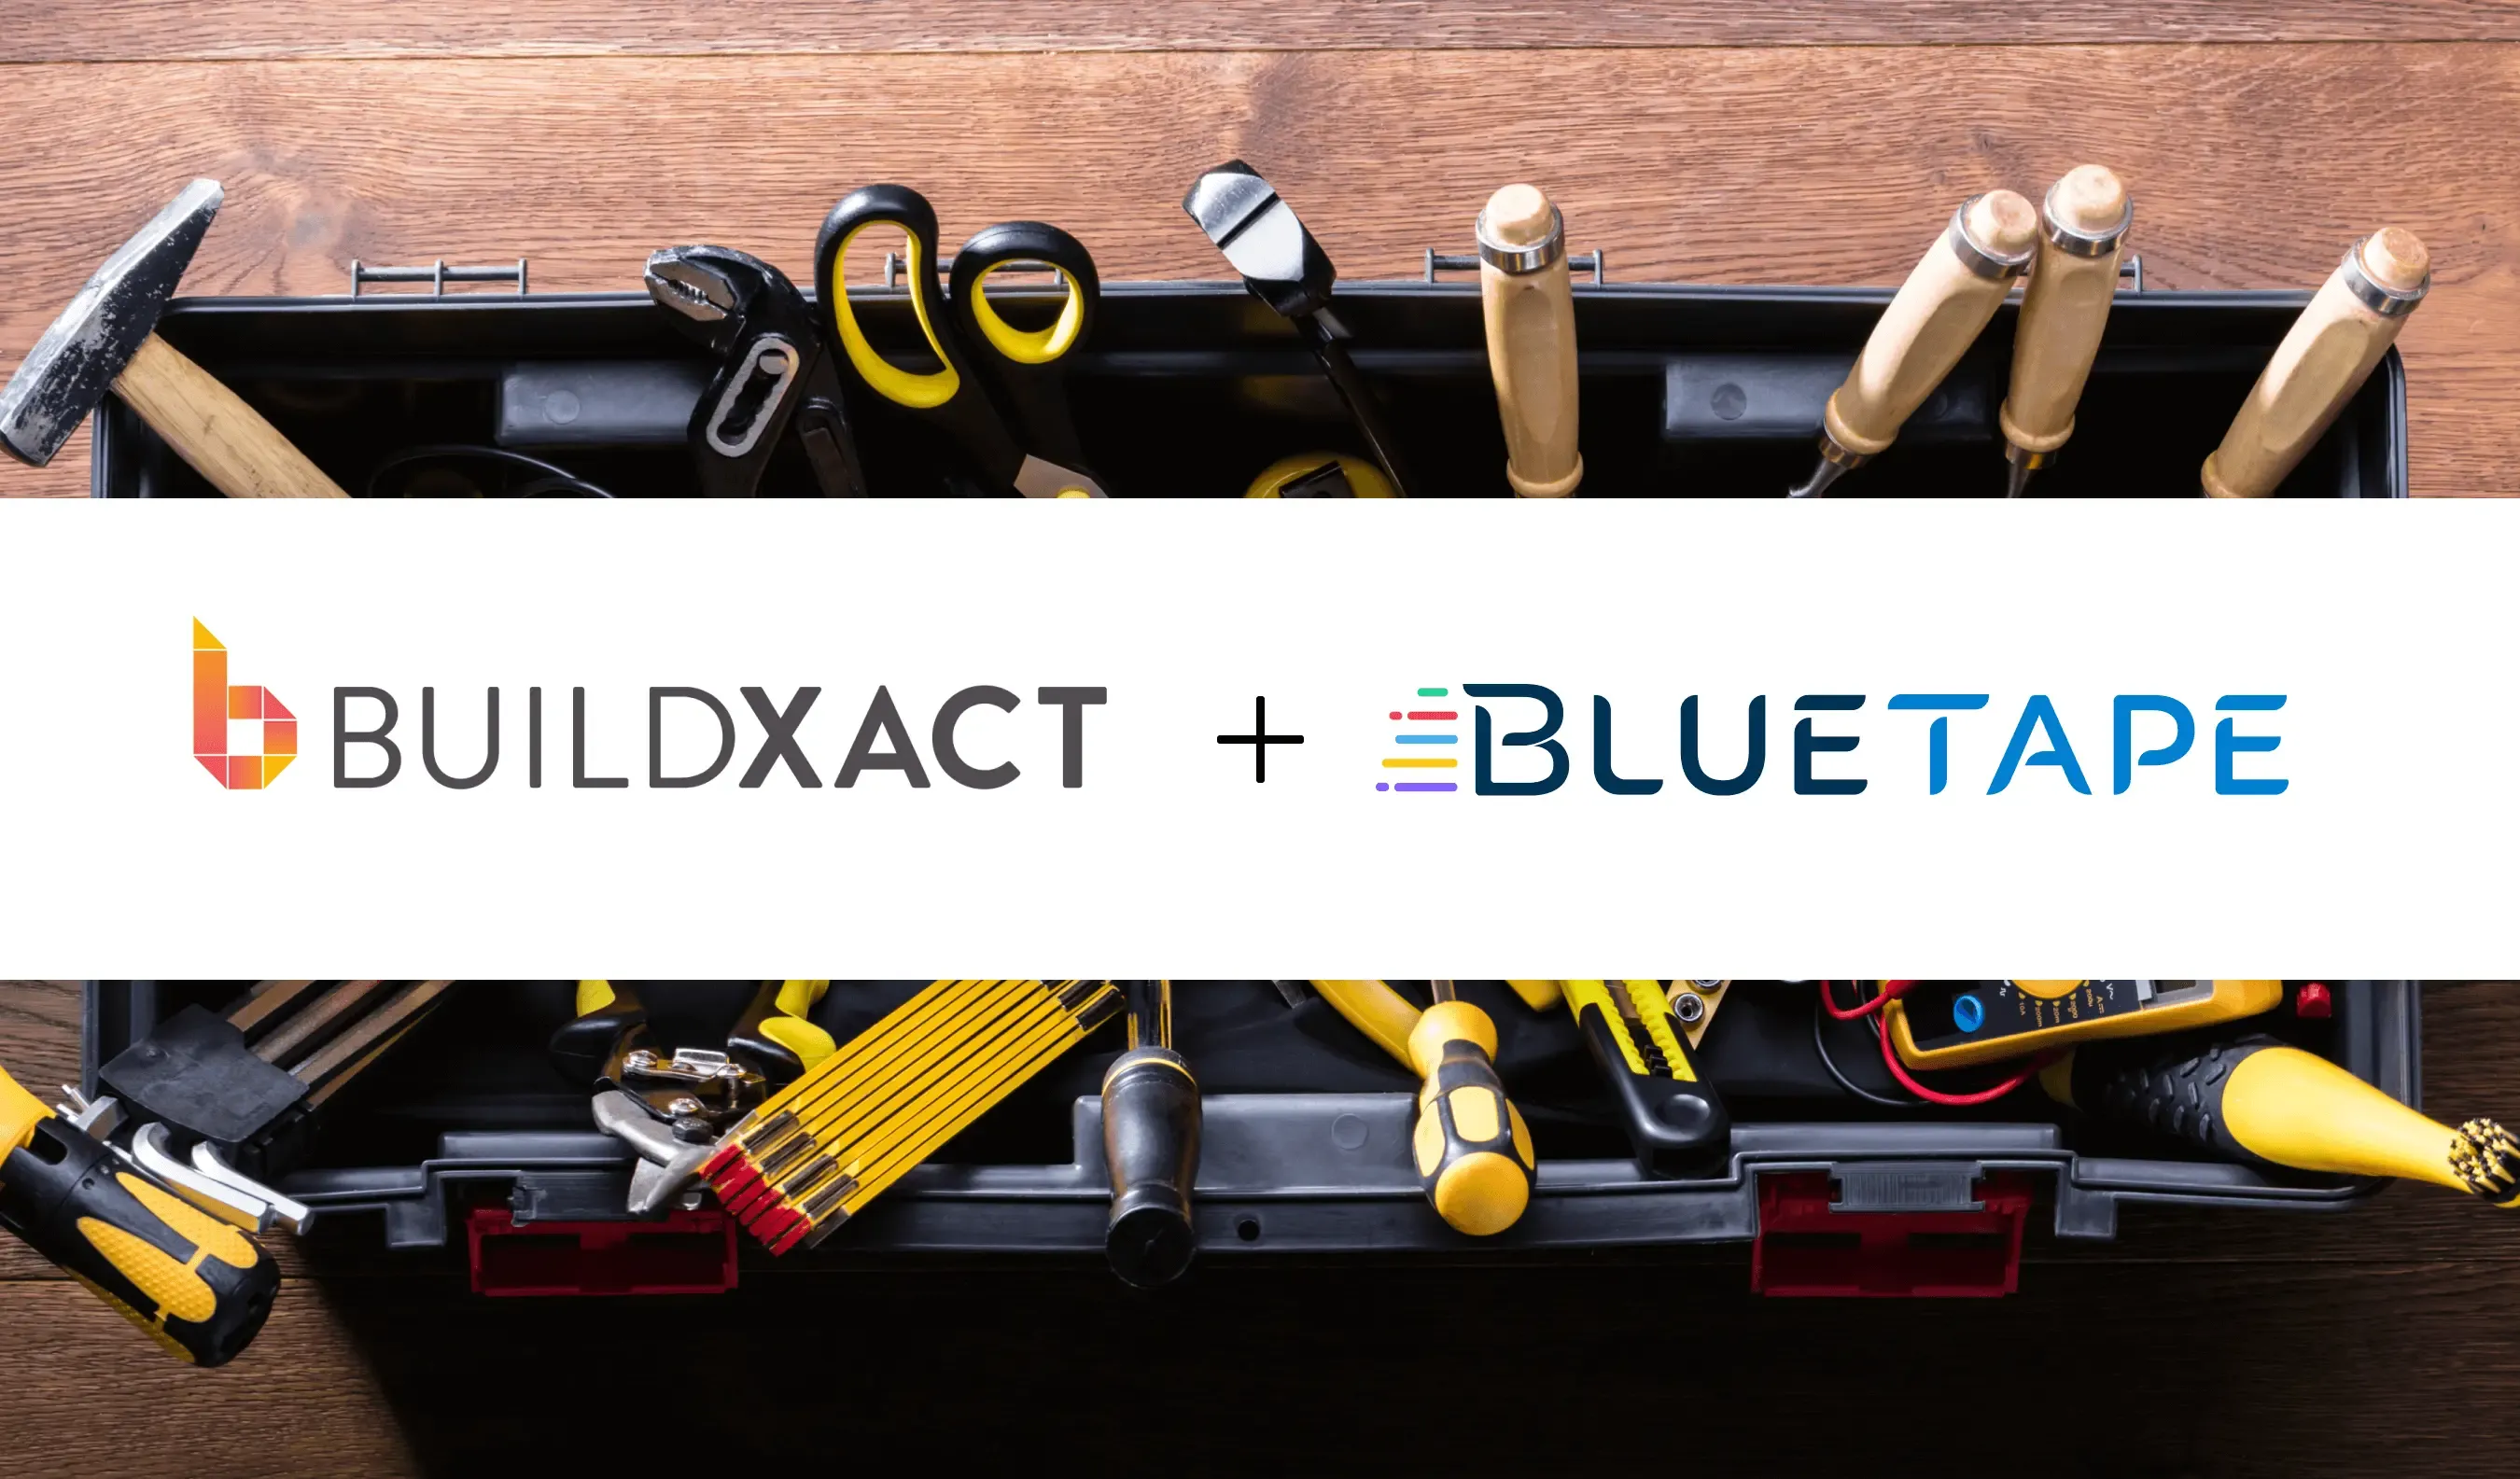 Buildxact plus BlueTape